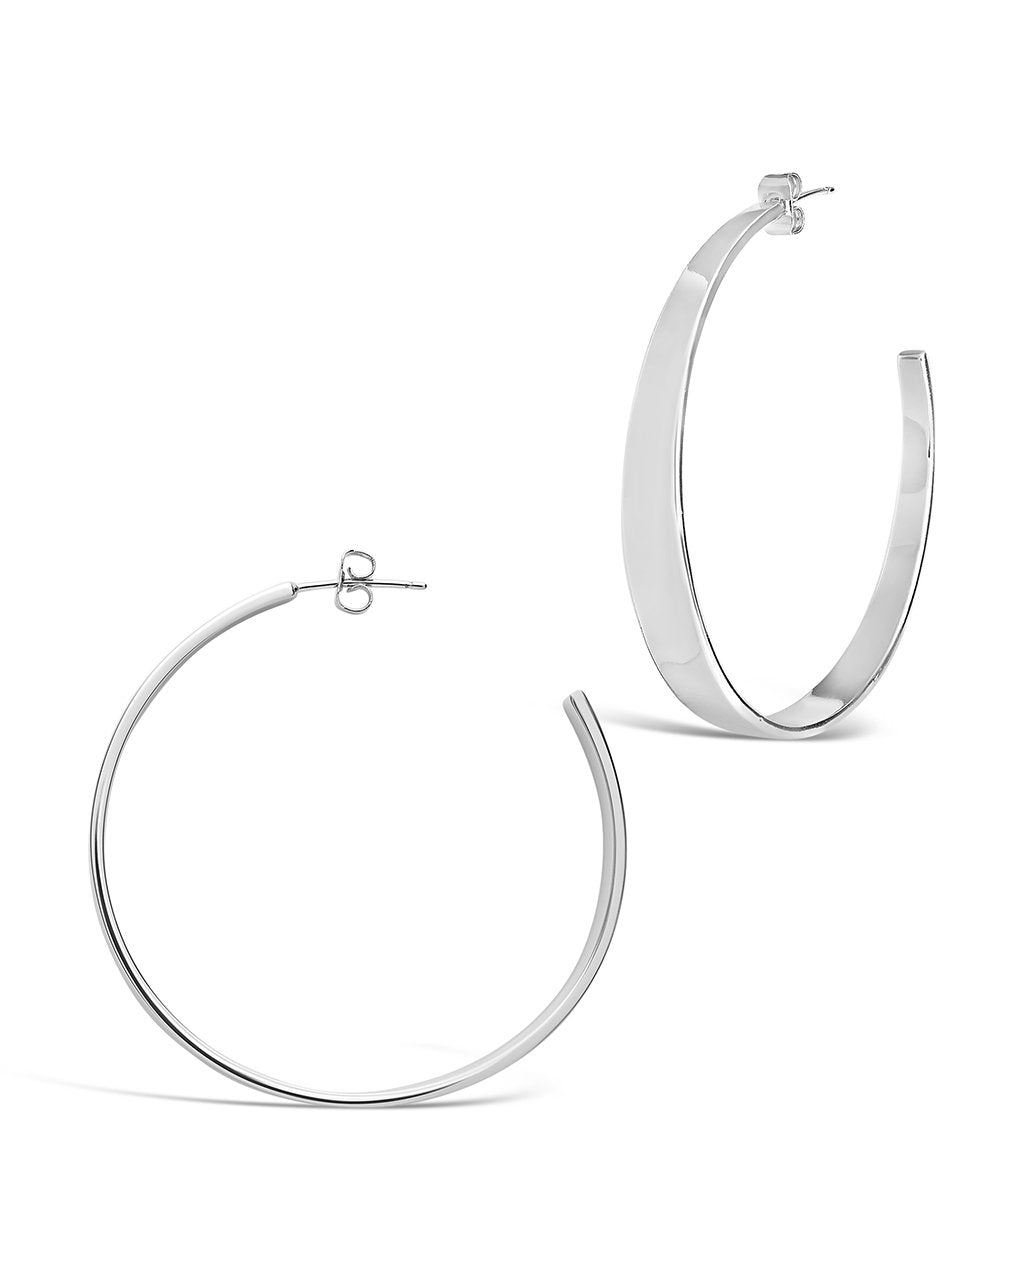 Already Shipped-open Silver Hoop Earrings 3.5 Cm Special Price 